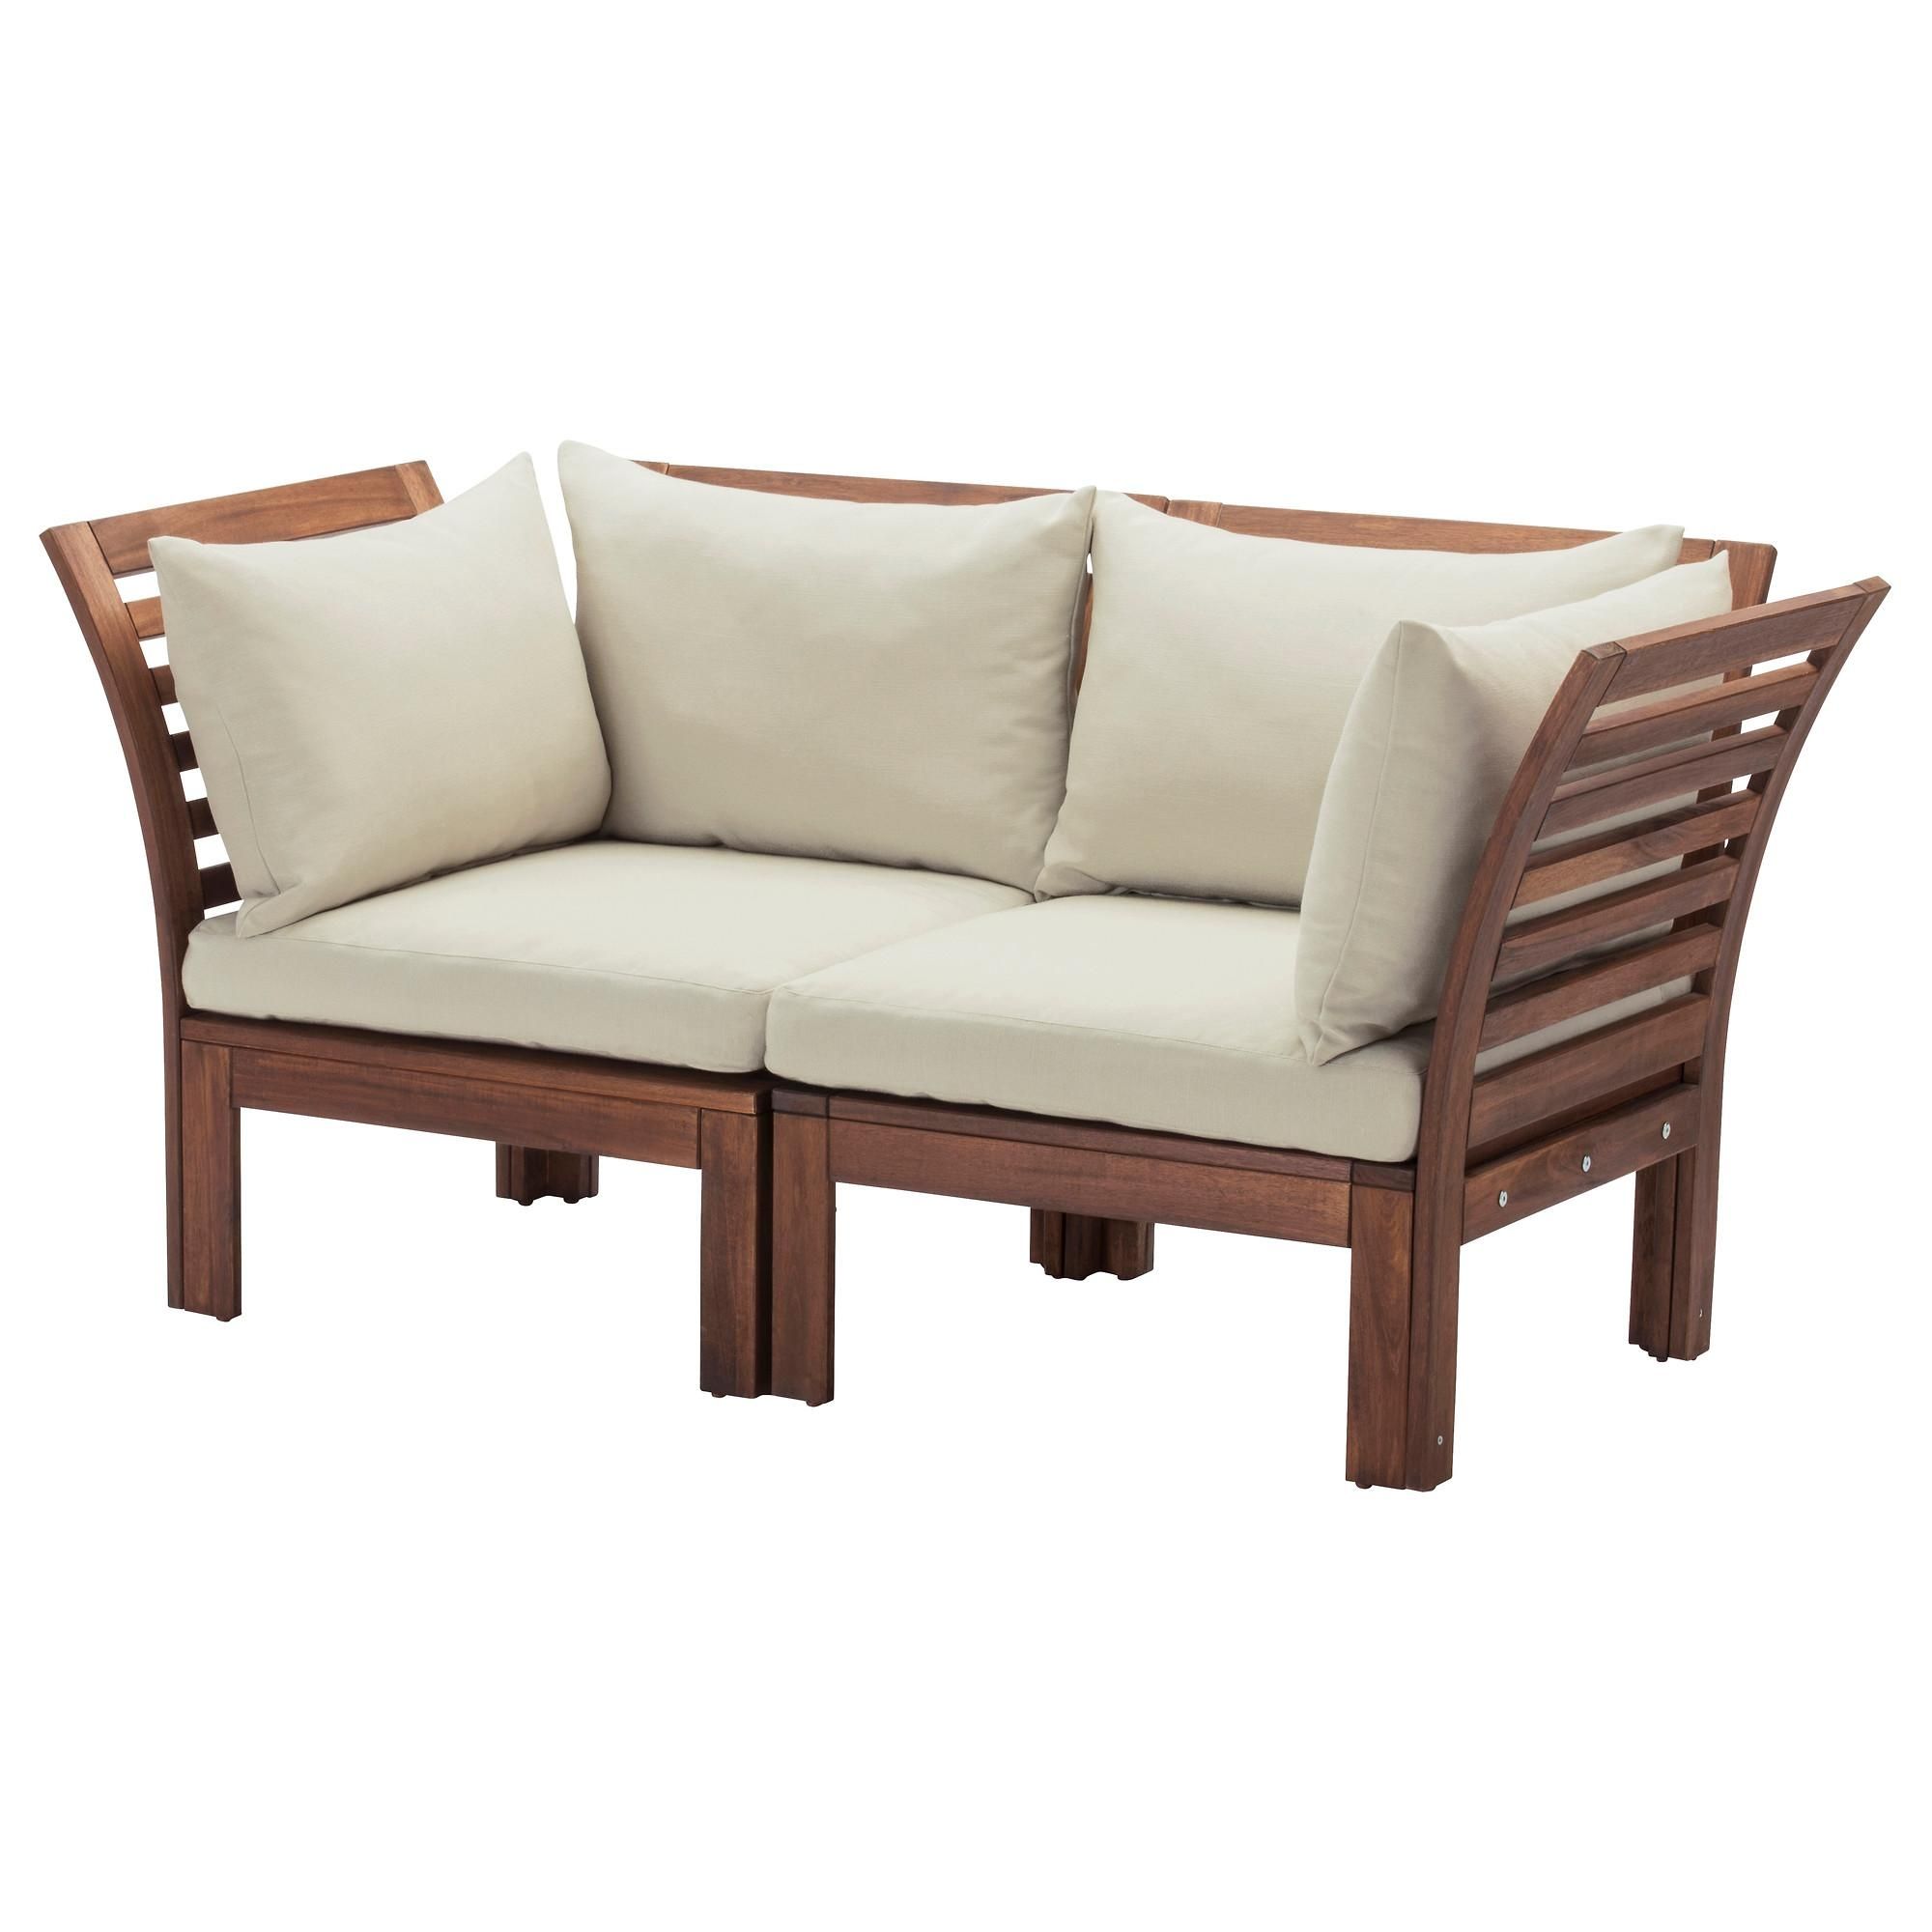 Äpplarö Outdoor Furniture – Ikea For Outdoor Sofa Chairs (View 7 of 20)